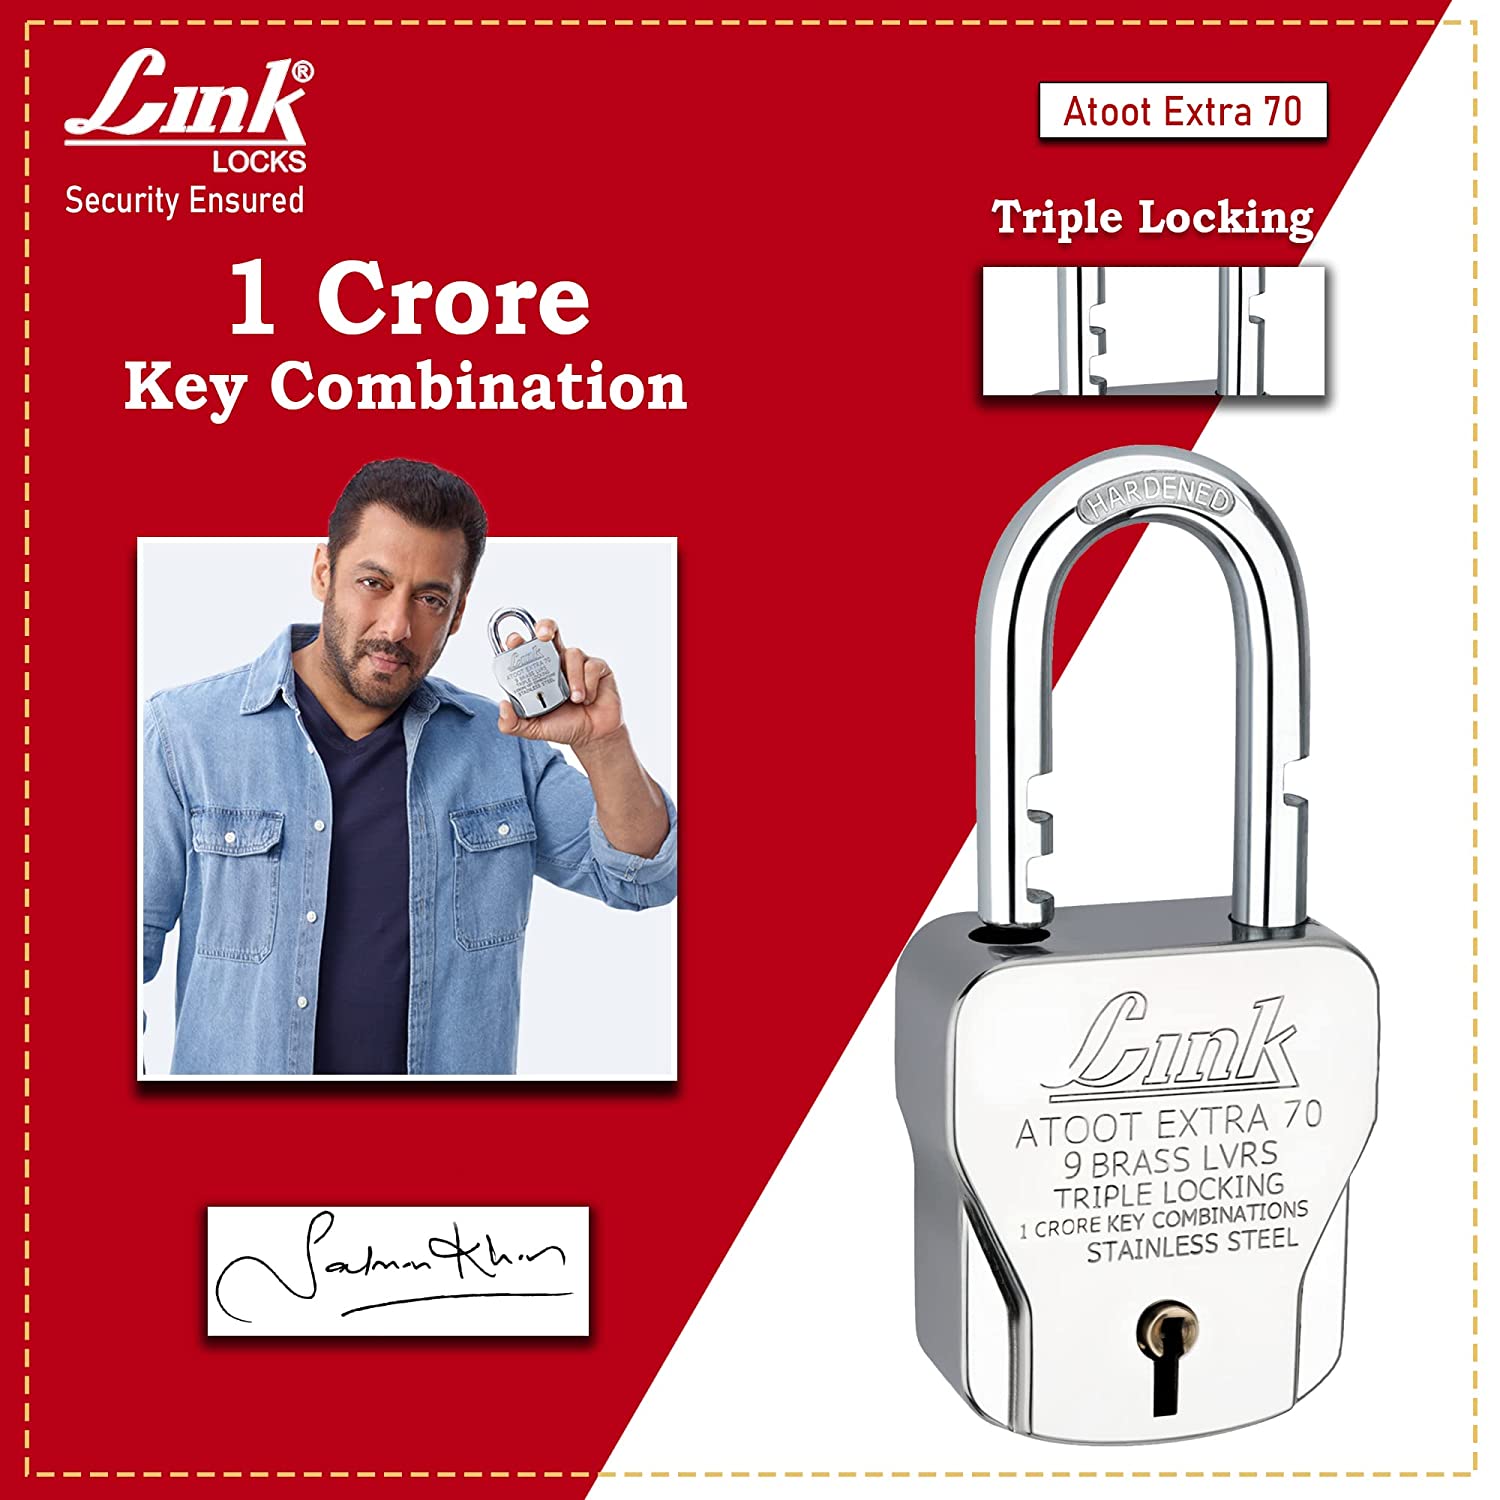 link lock Atoot Extra 70 mechanism